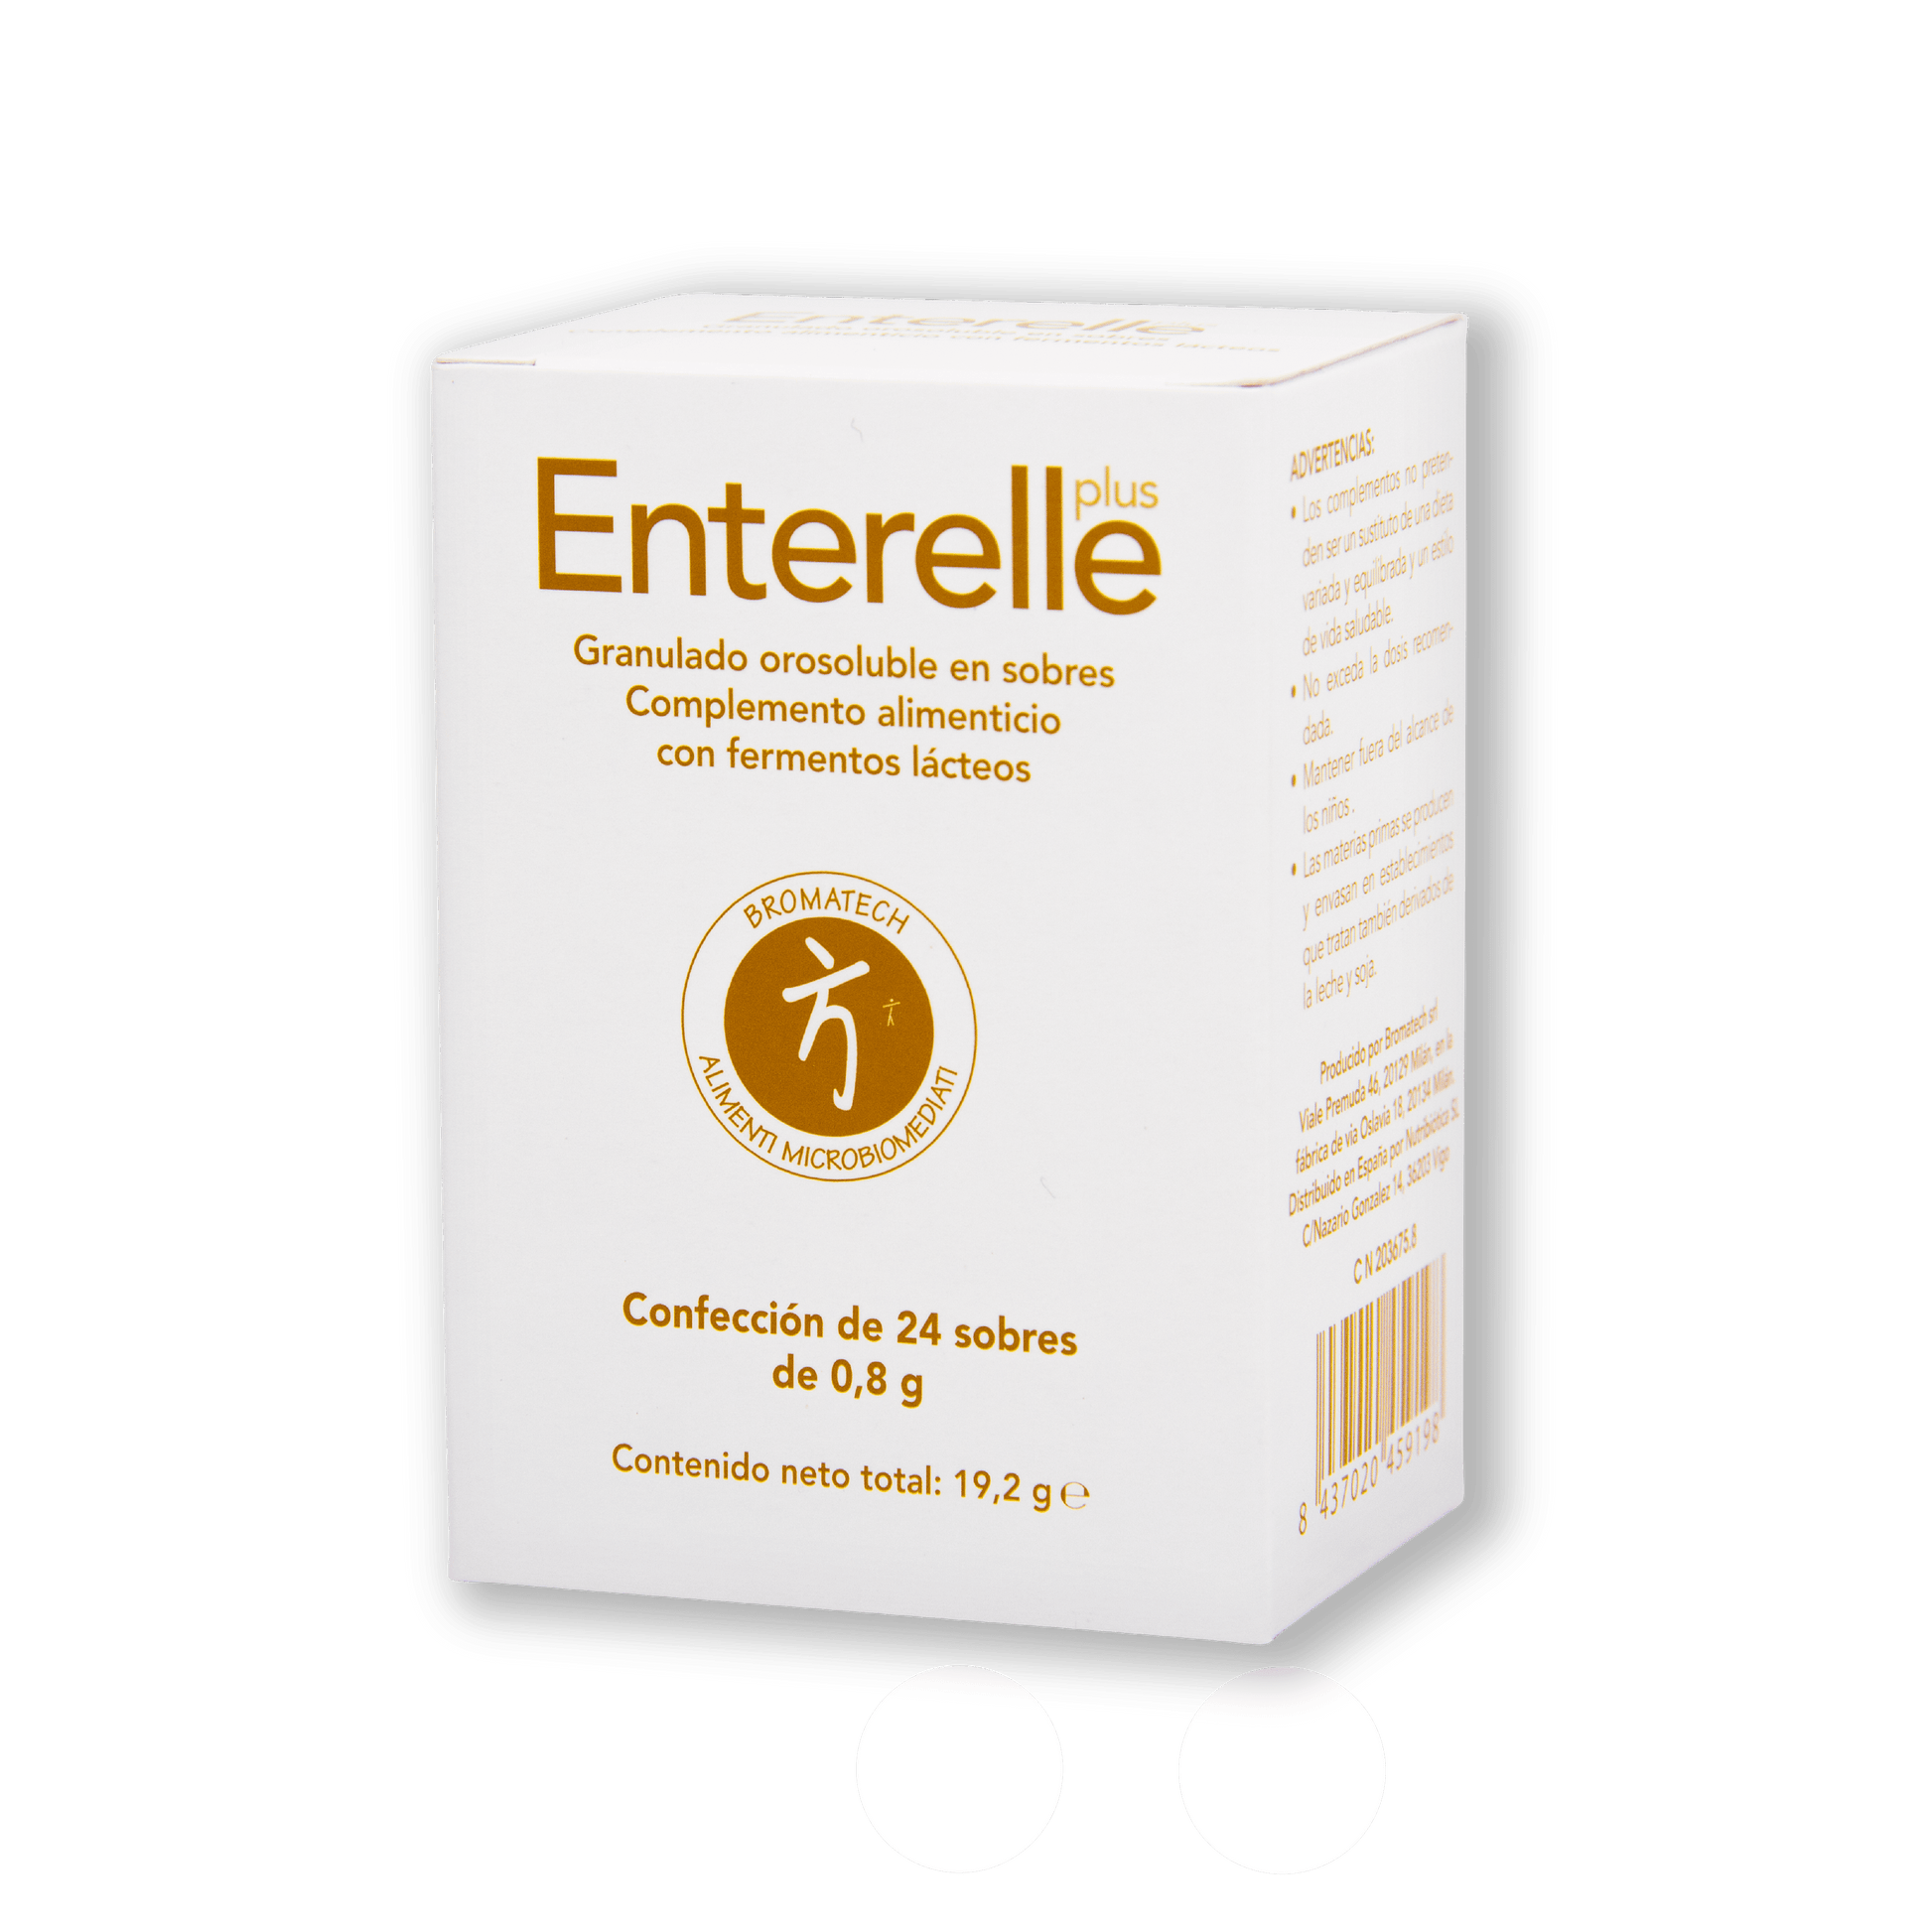 Enterelle Plus | Bromatech - Dietetica Ferrer